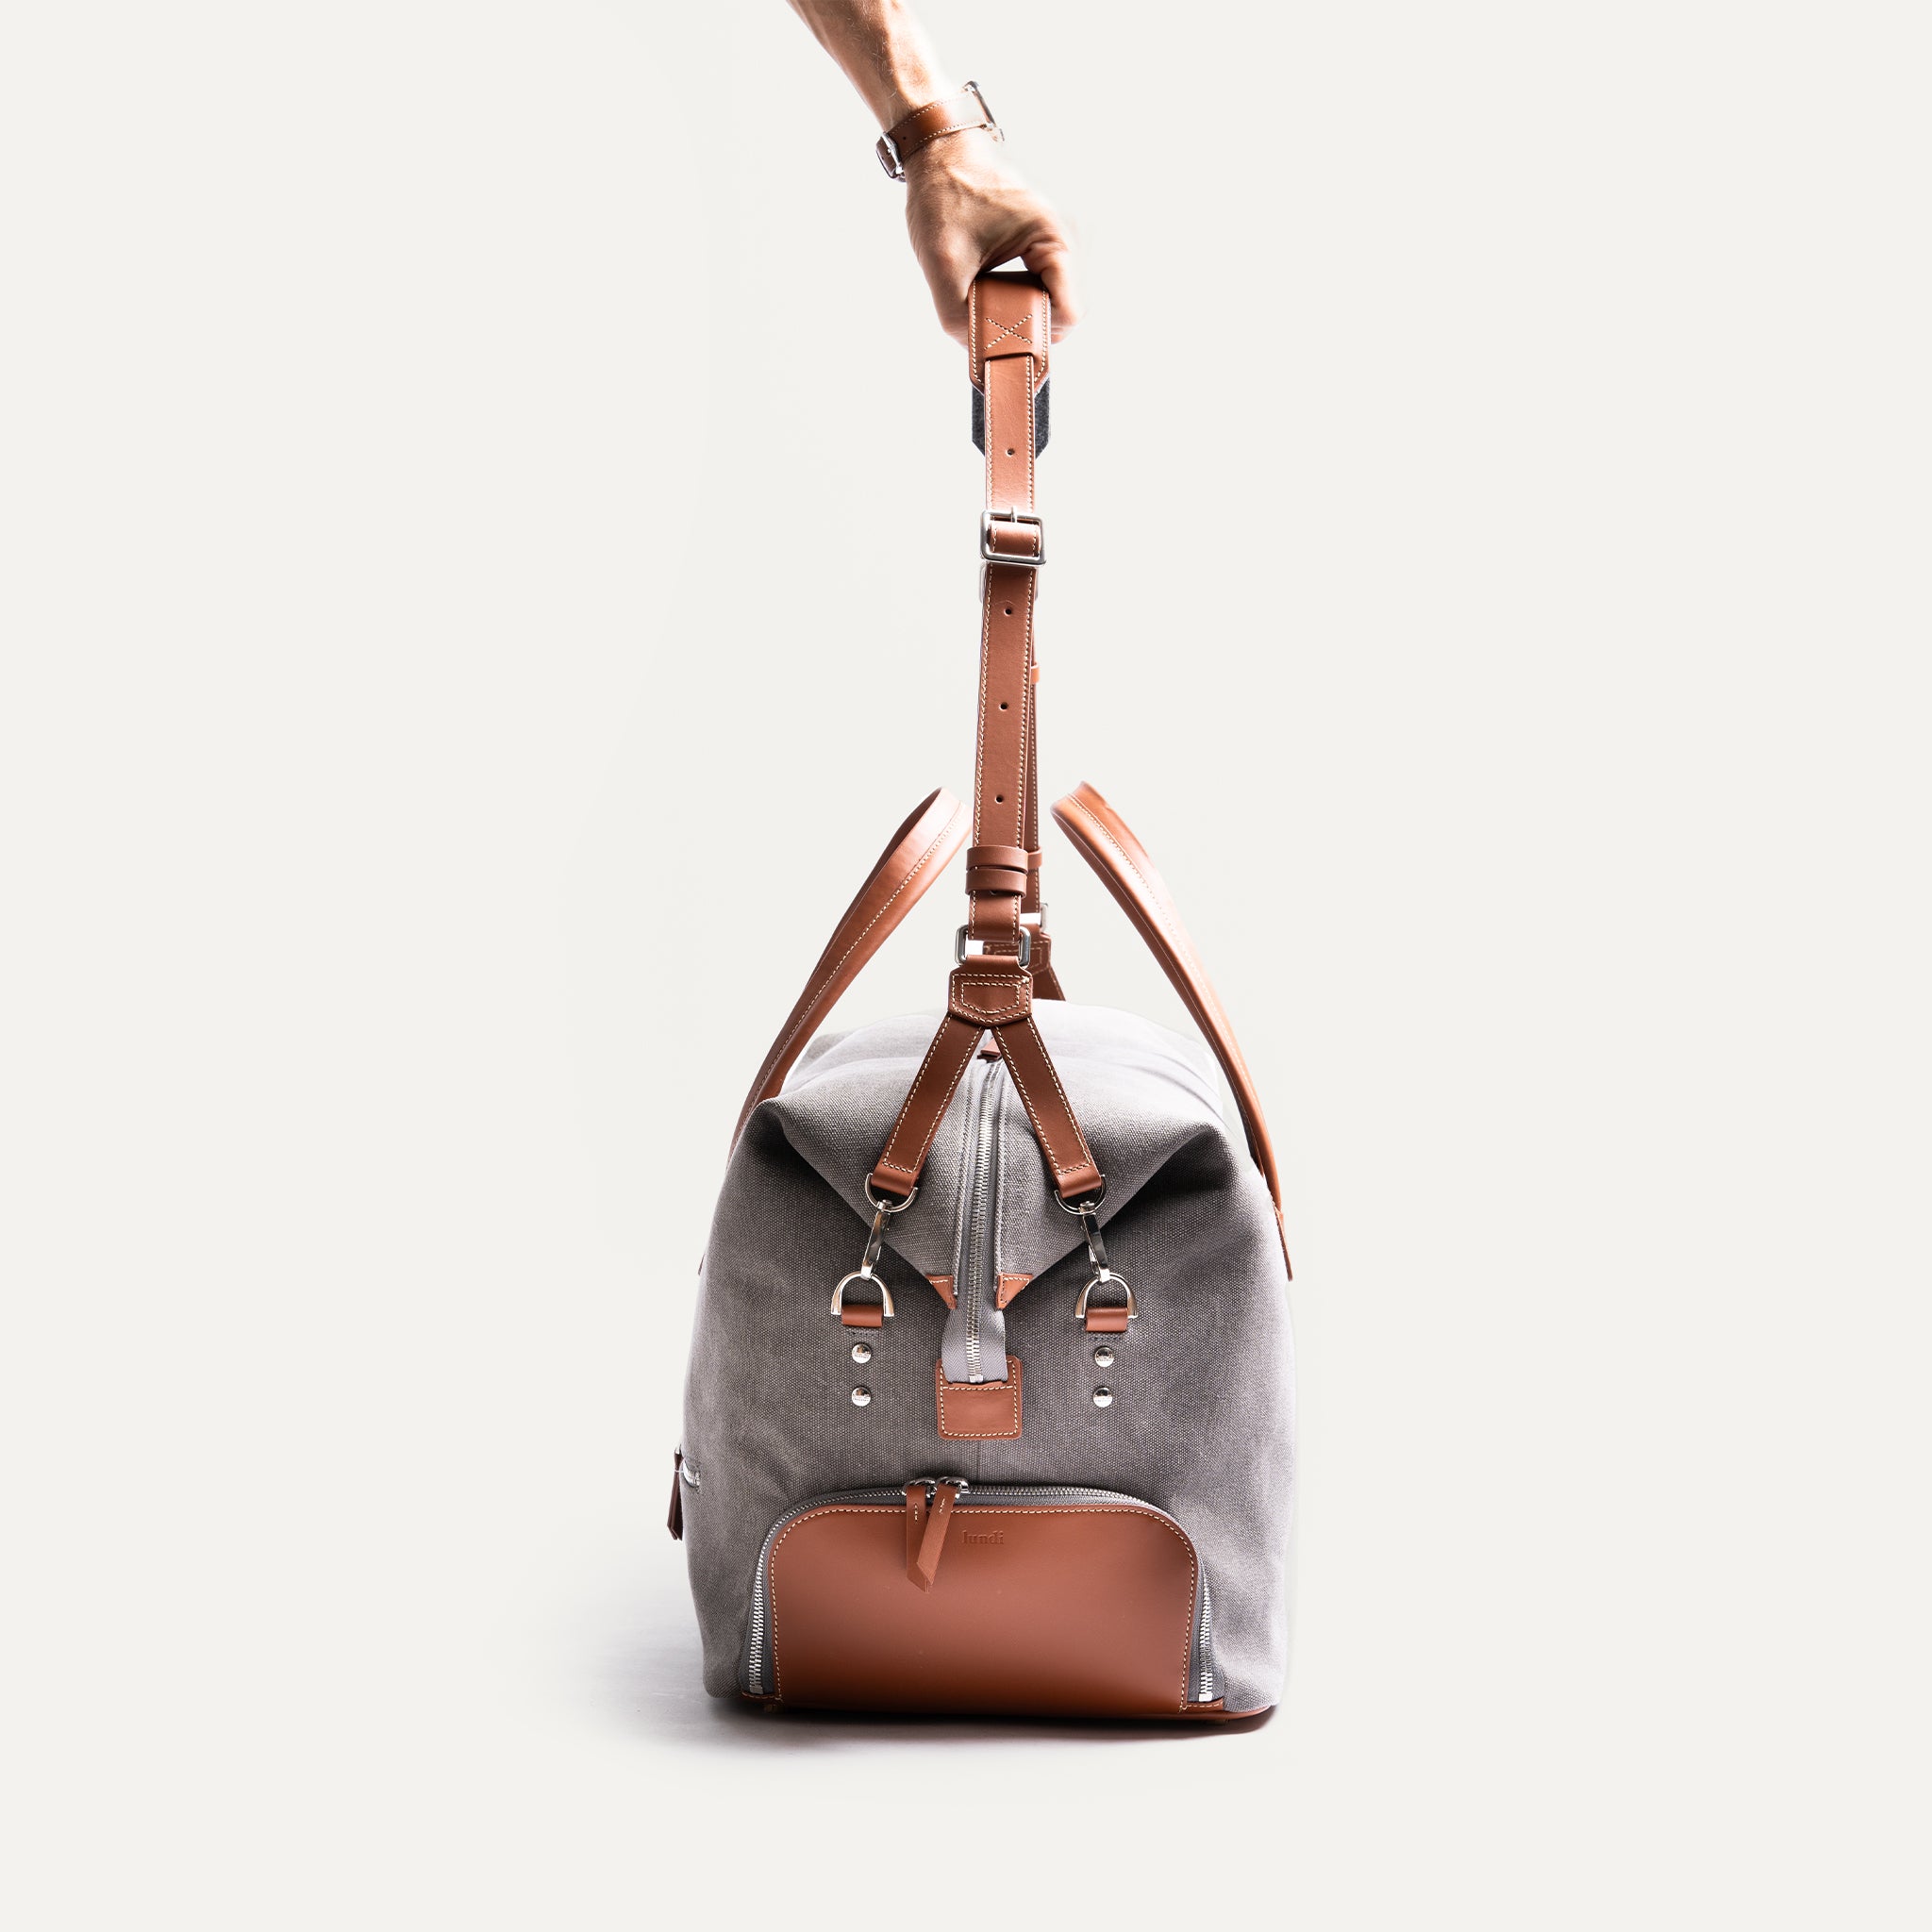 REMINGTON, Gray & Cognac | lundi Cotton and Leather Travel bag